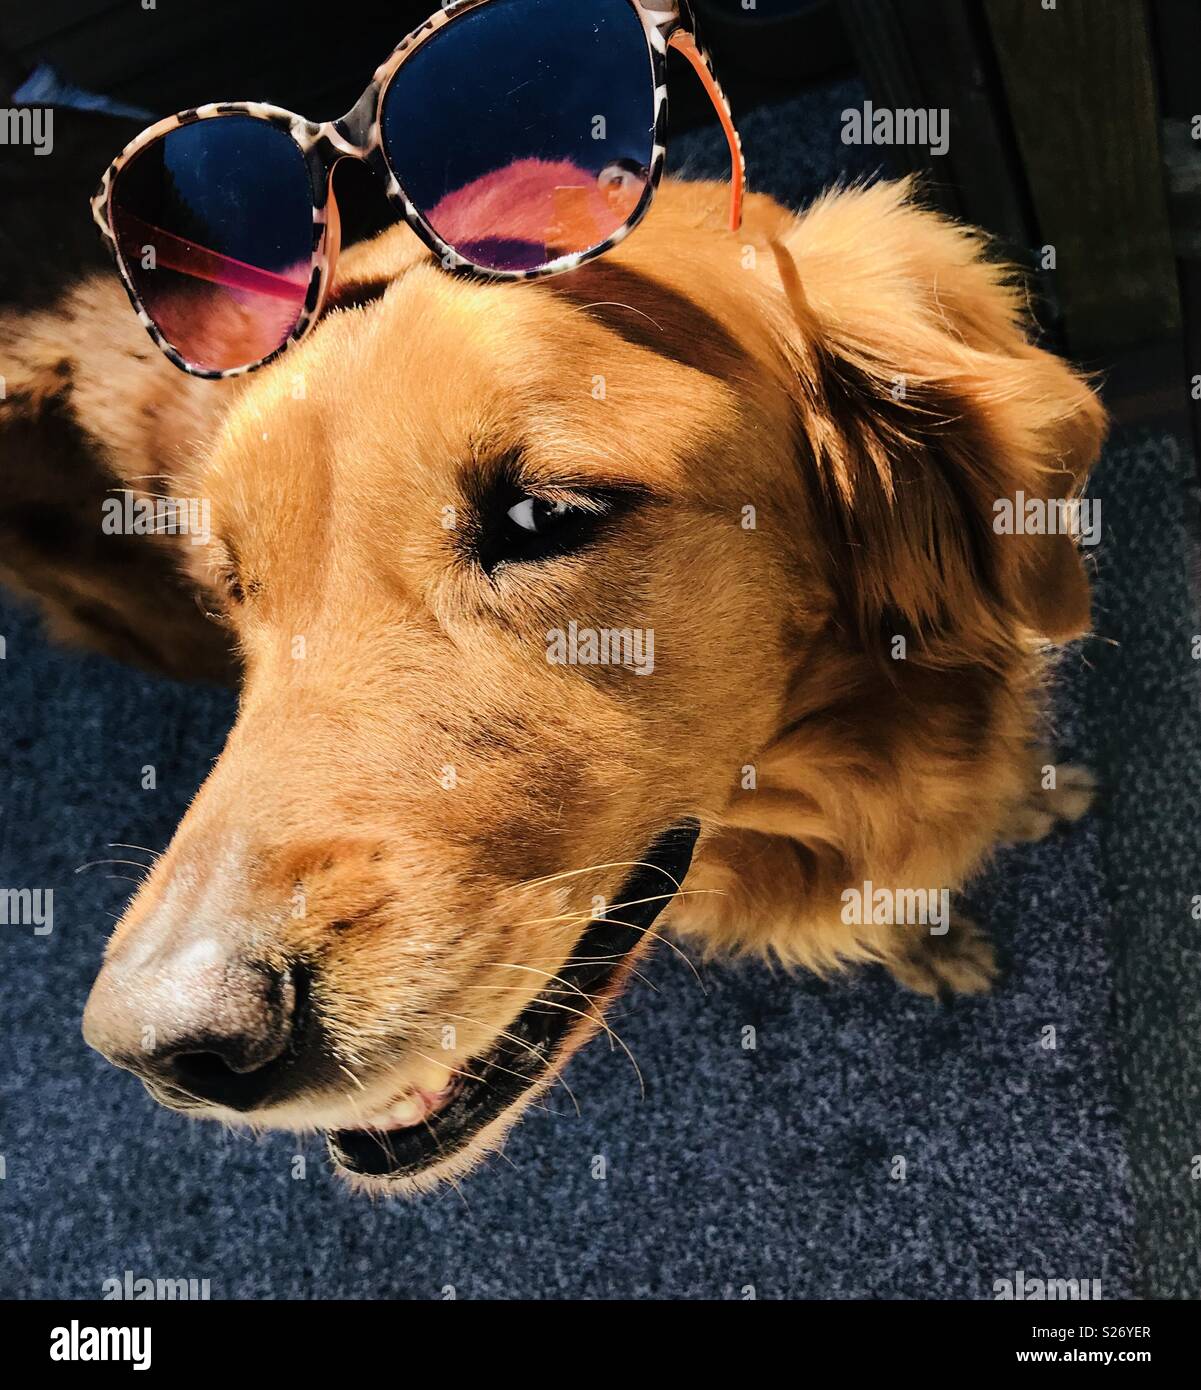 Dog wearing sunglasses on head Stock Photo